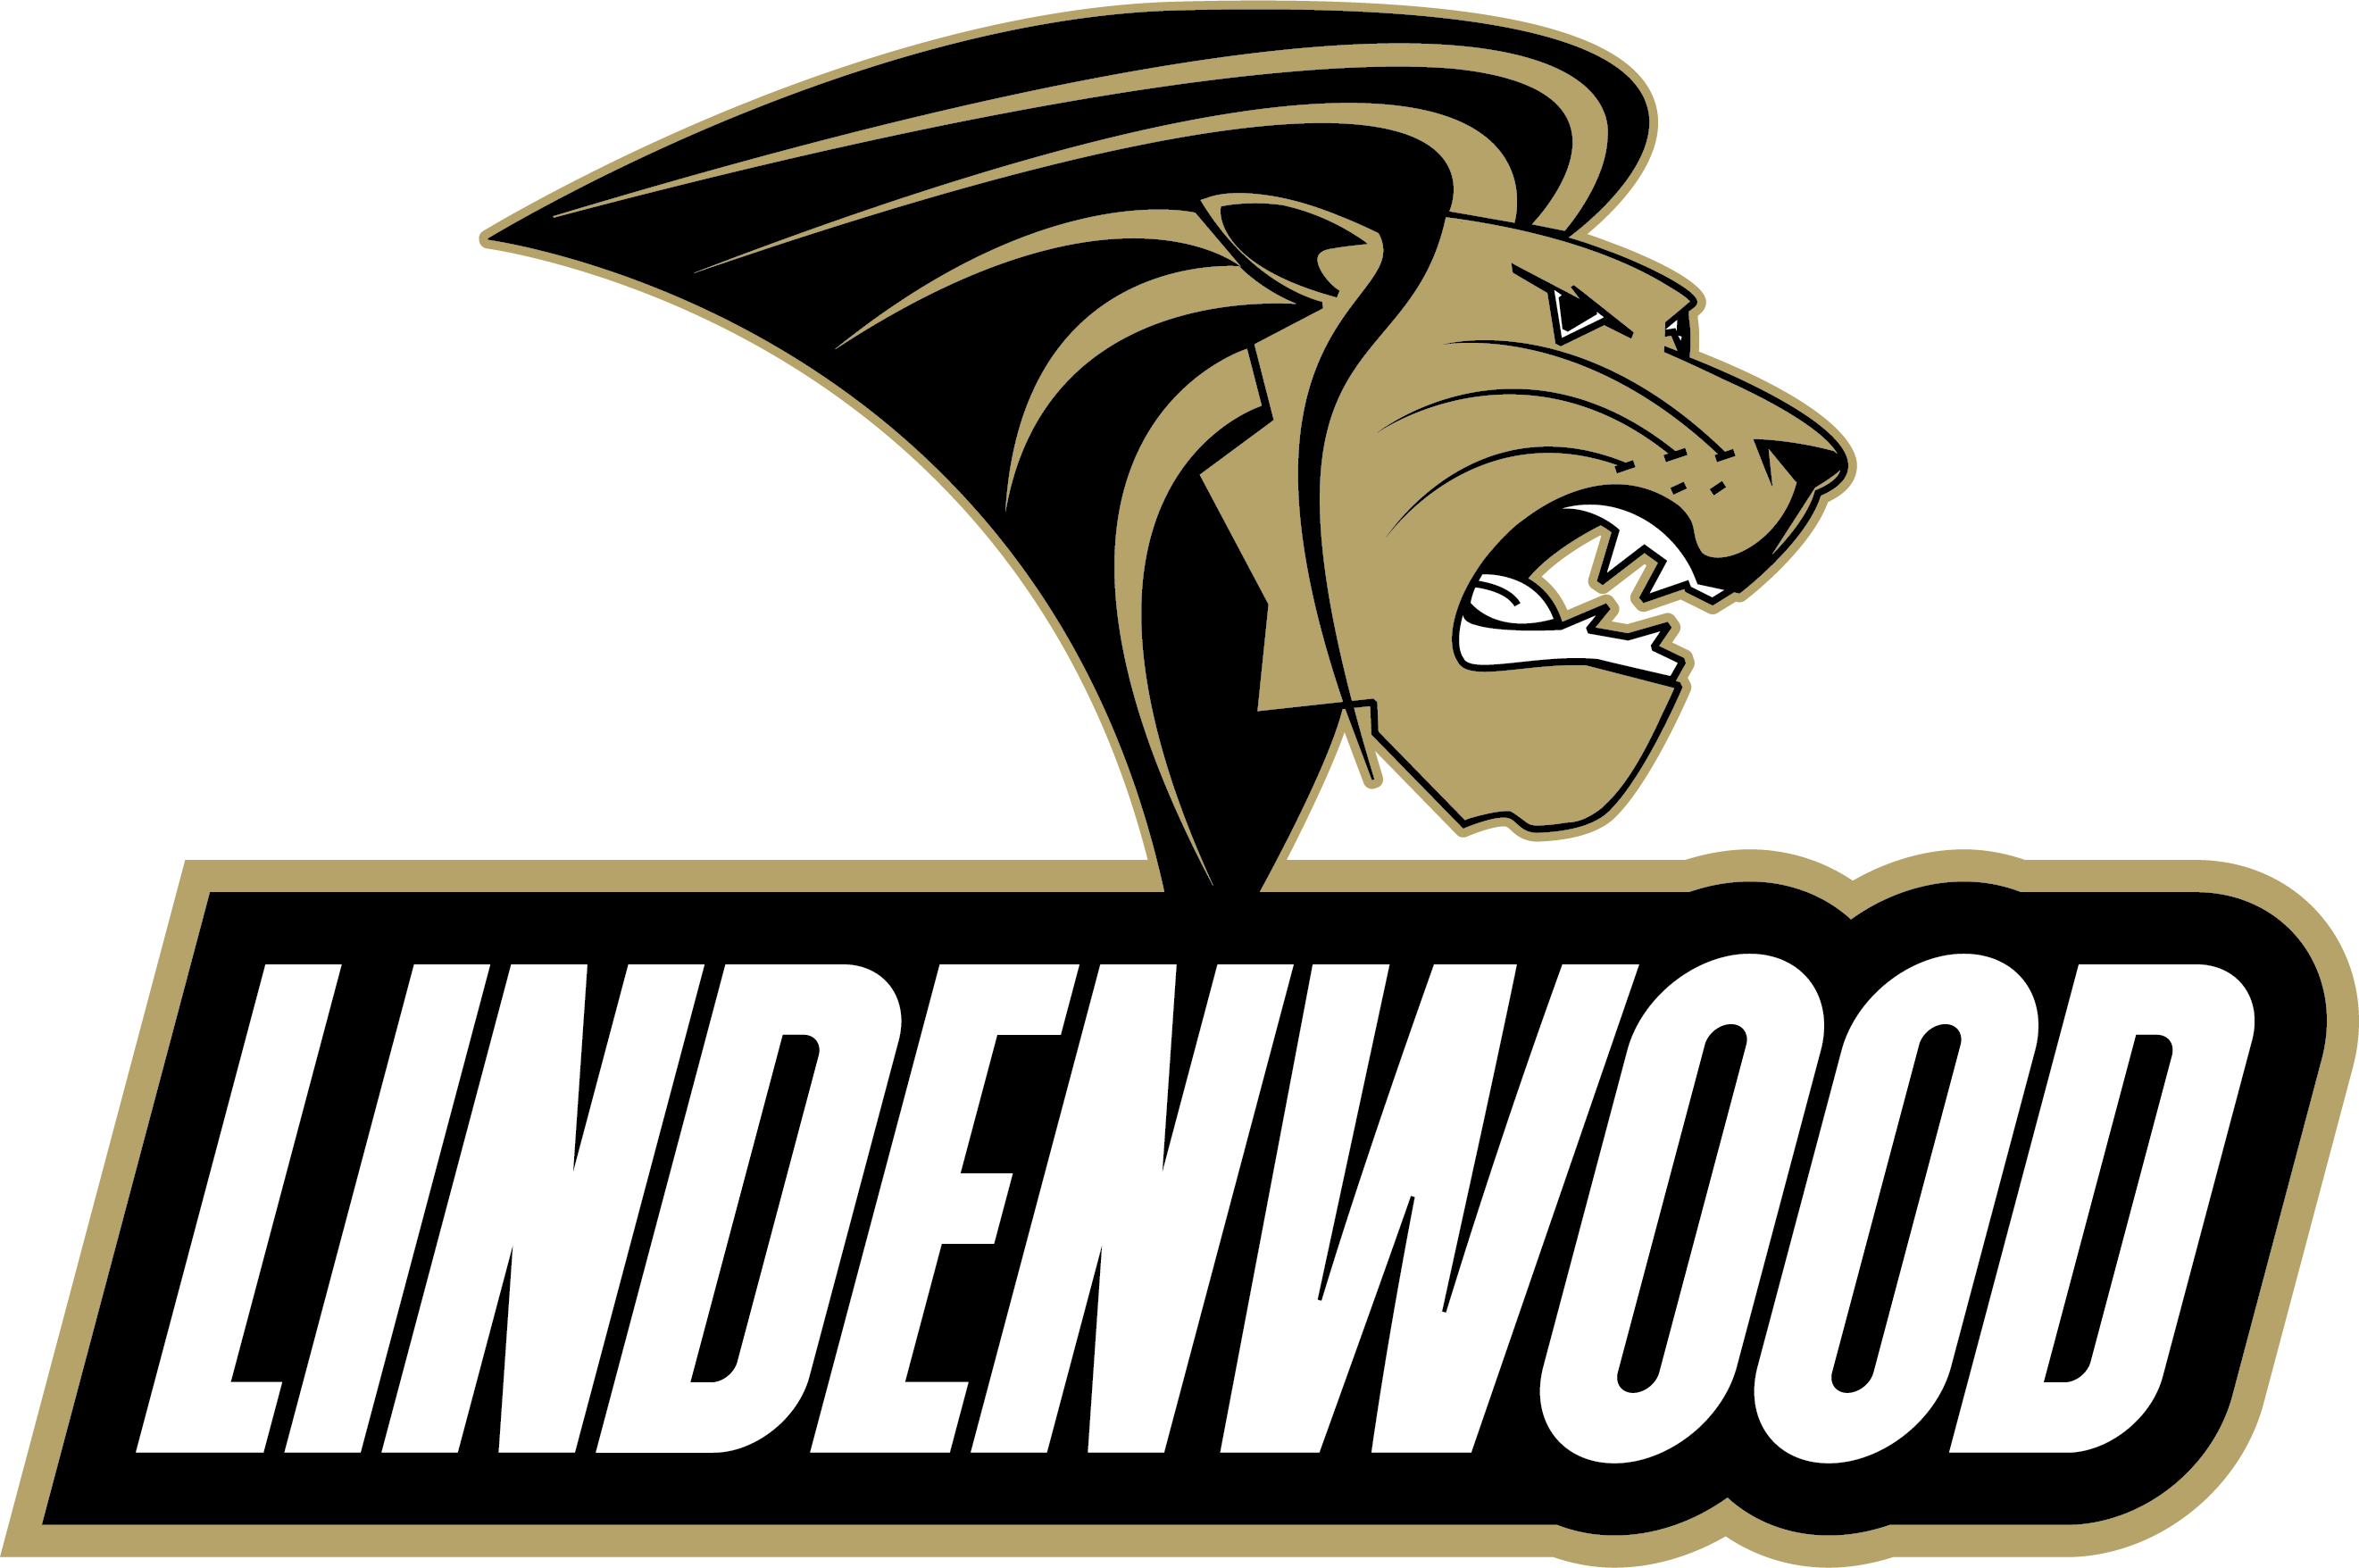 Lindenwood University - Athletics - Primary Logo - Color